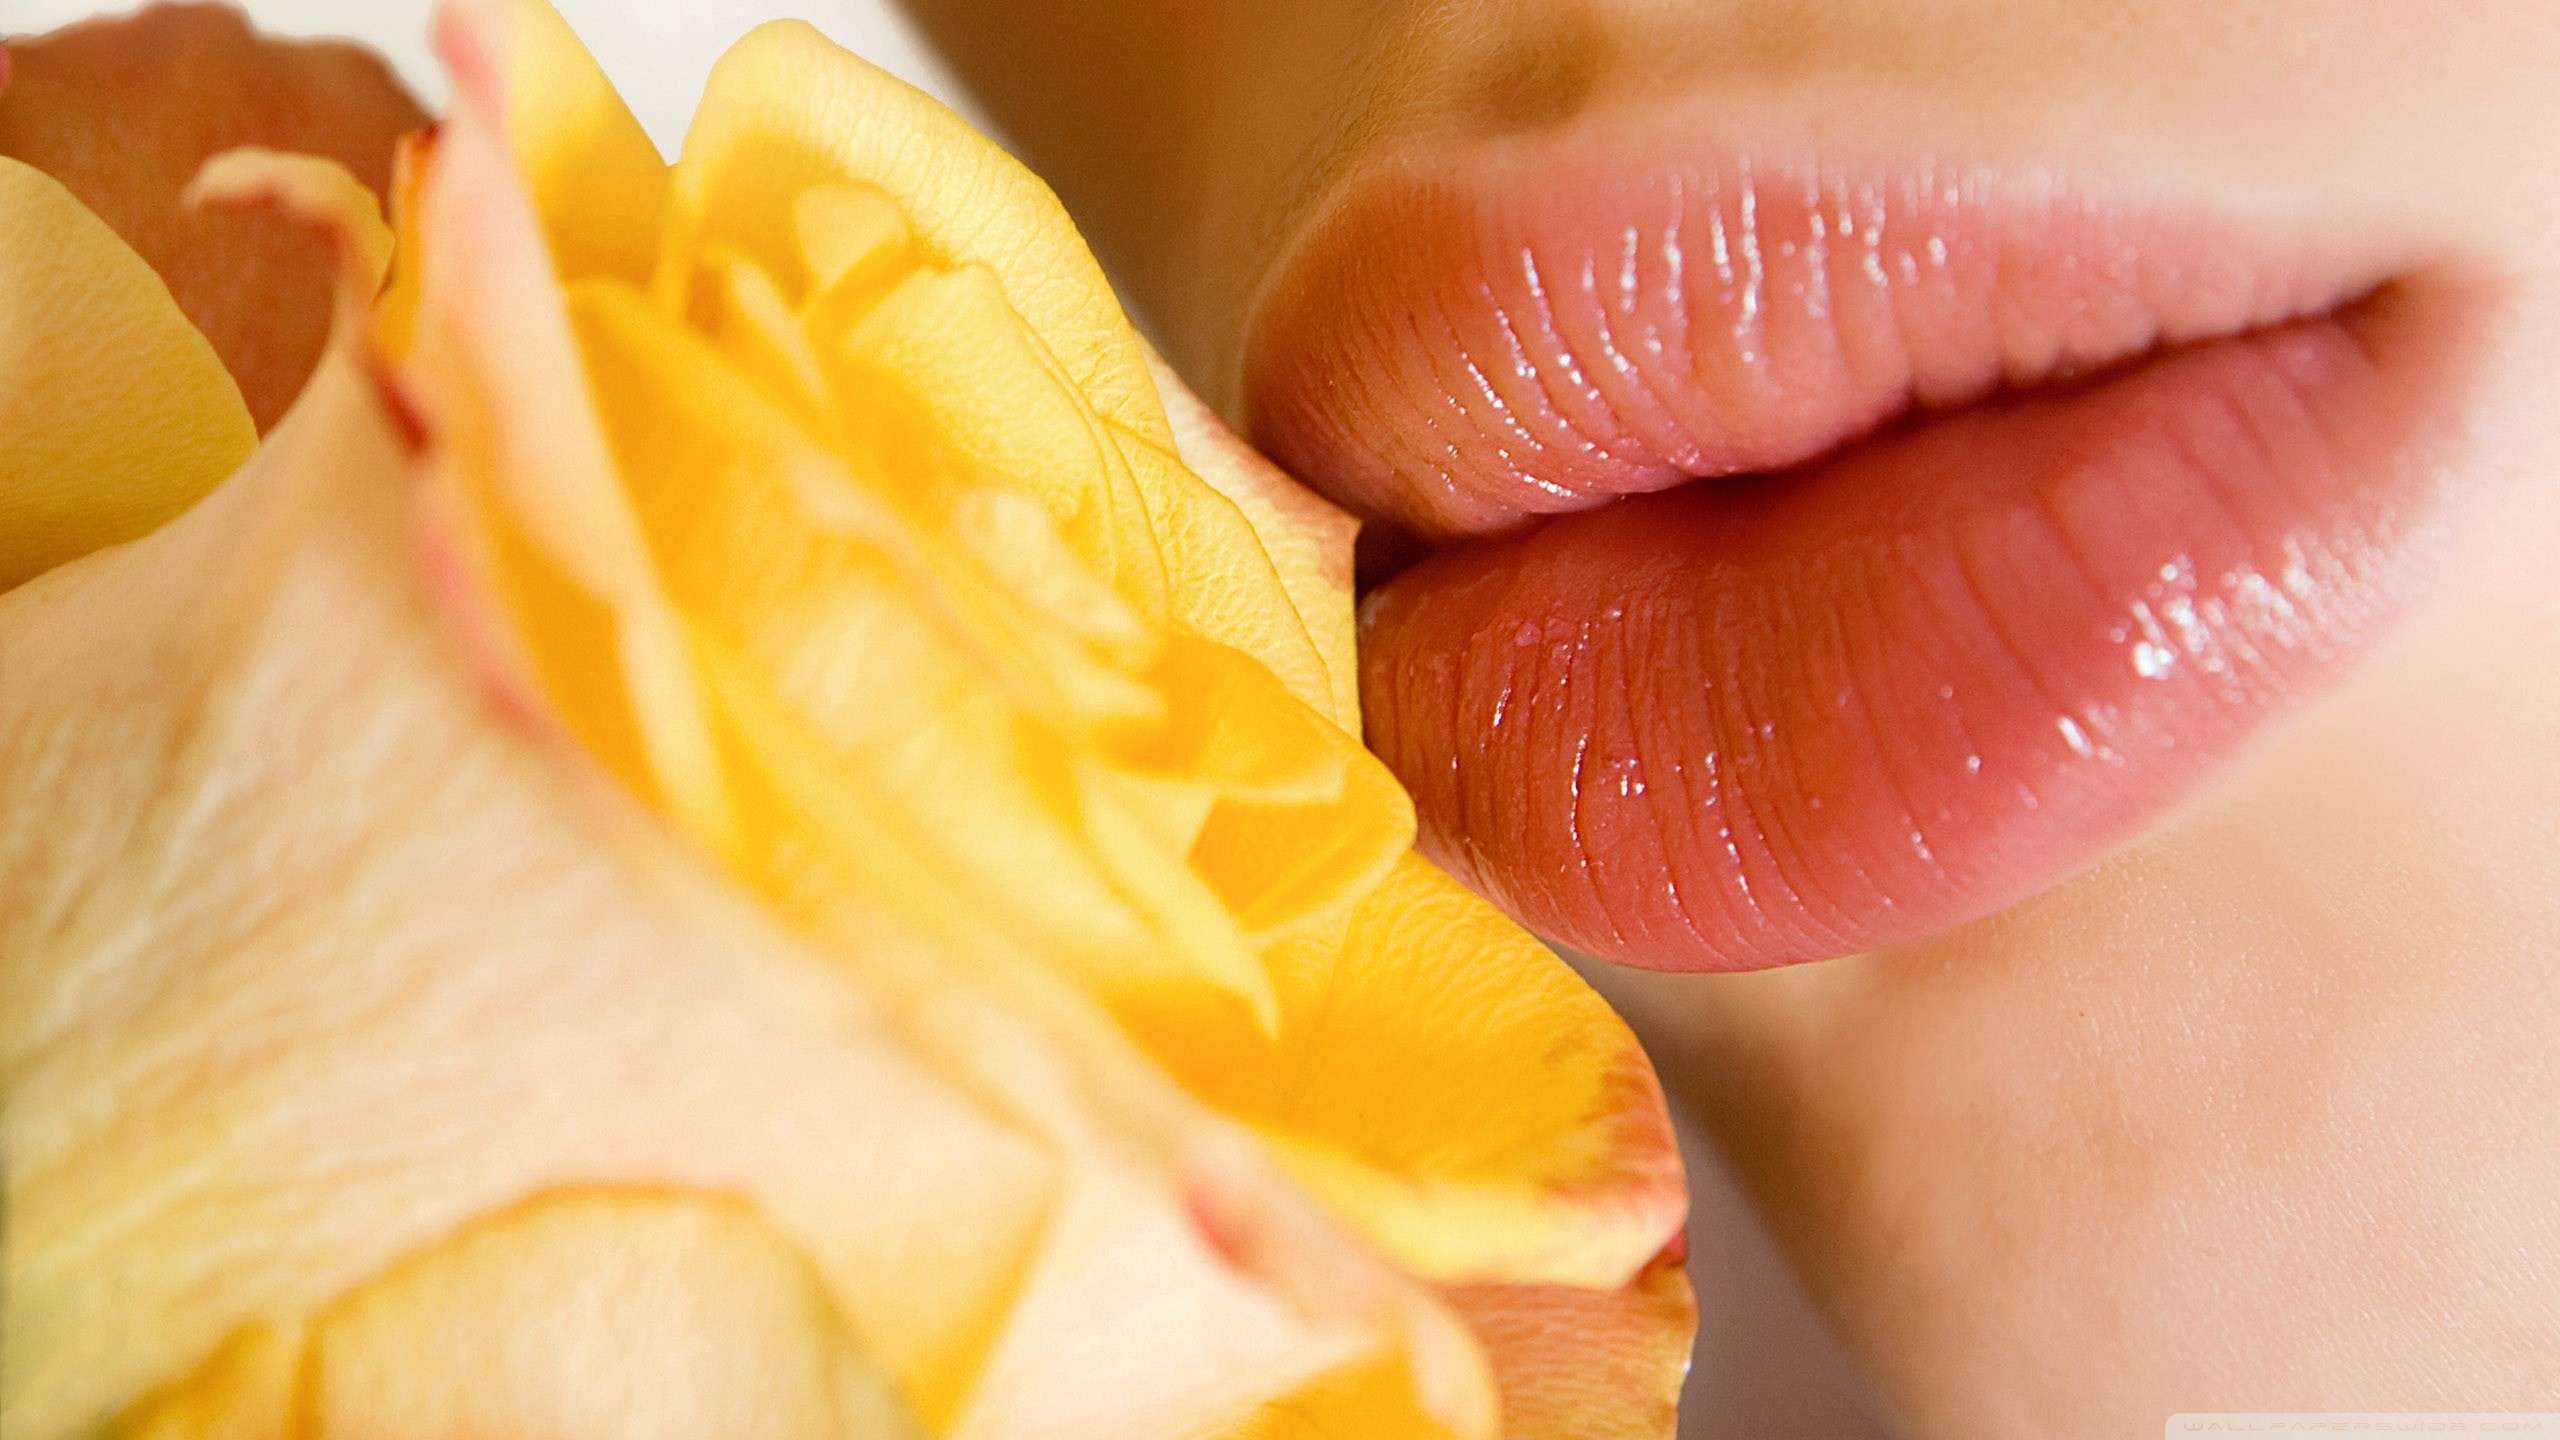 beautiful lips hd wallpapers,yellow,junk food,hand,skin,finger